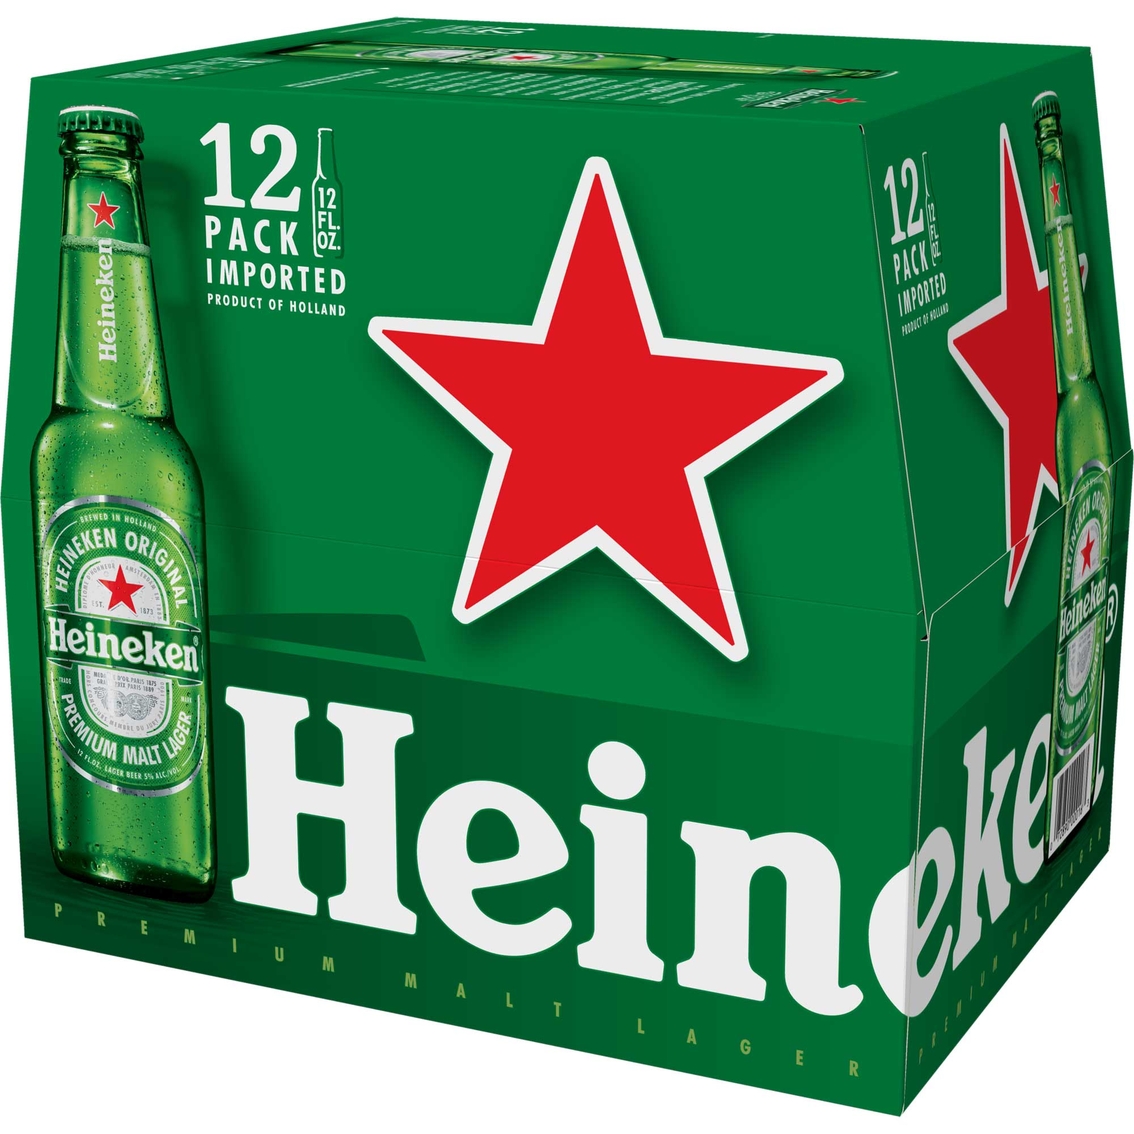 Heineken 12 oz. Bottles, 12 pk. - Image 2 of 2